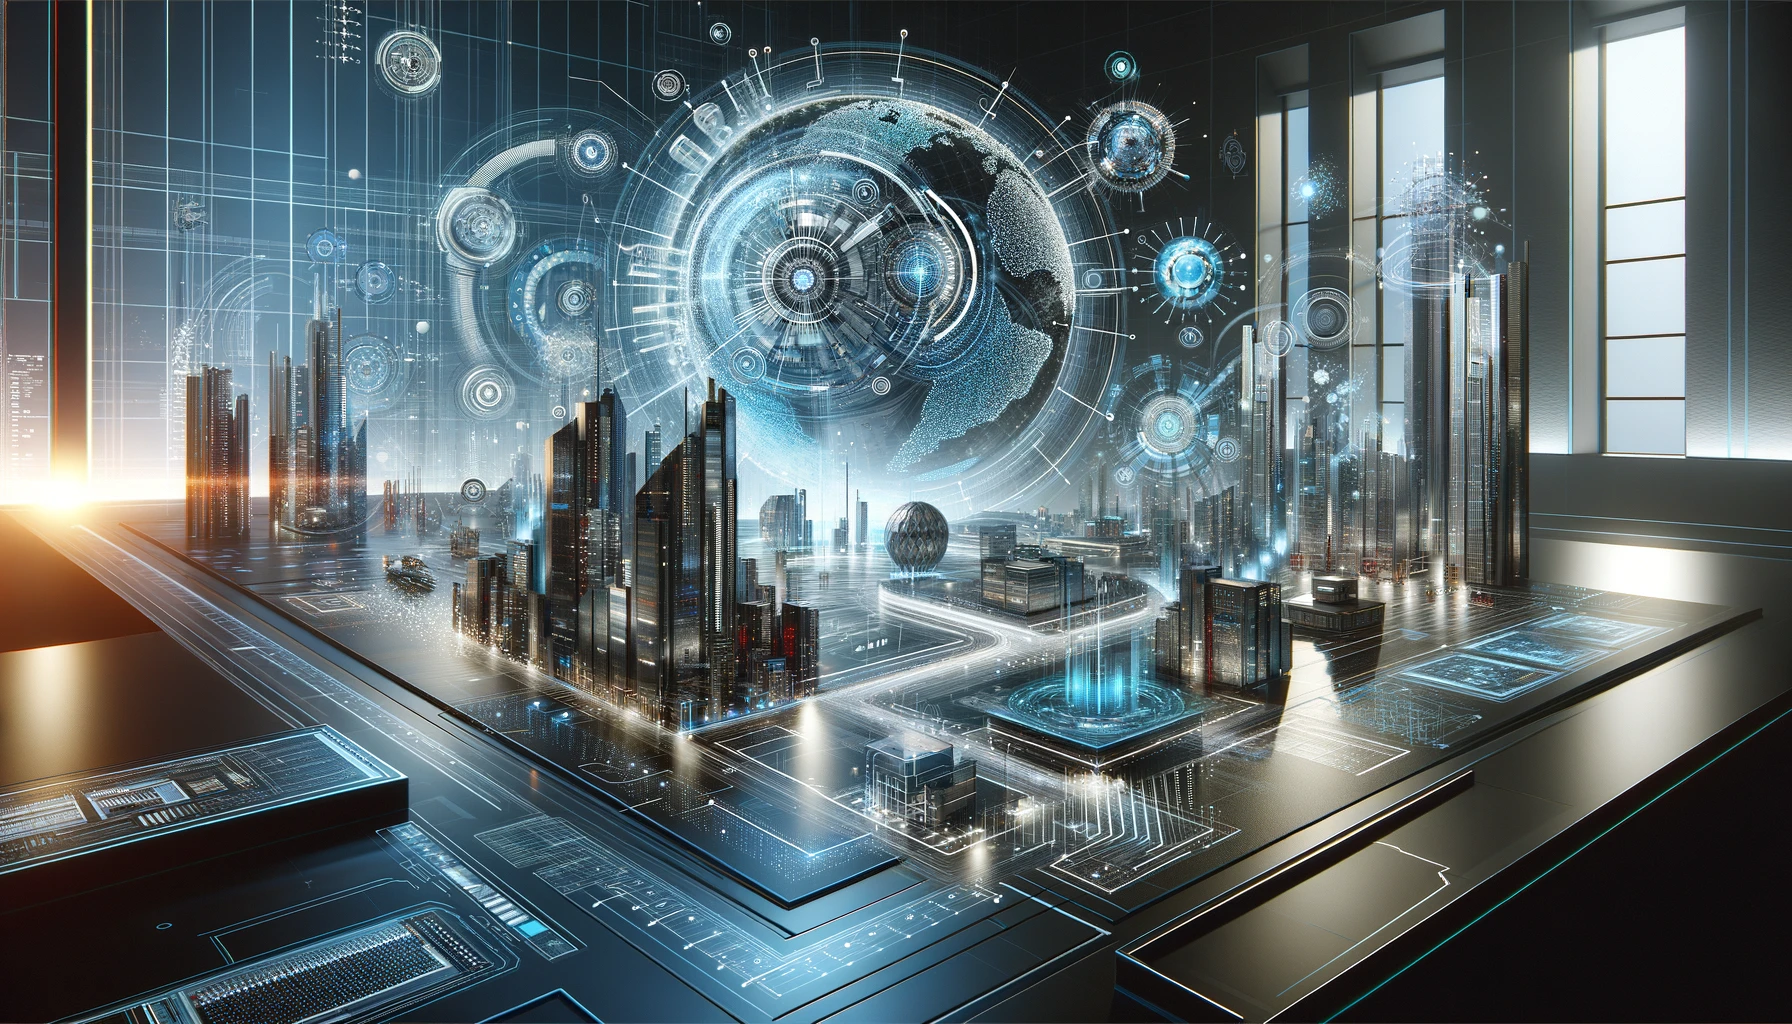 Visualizing the Future of Enterprise Architecture